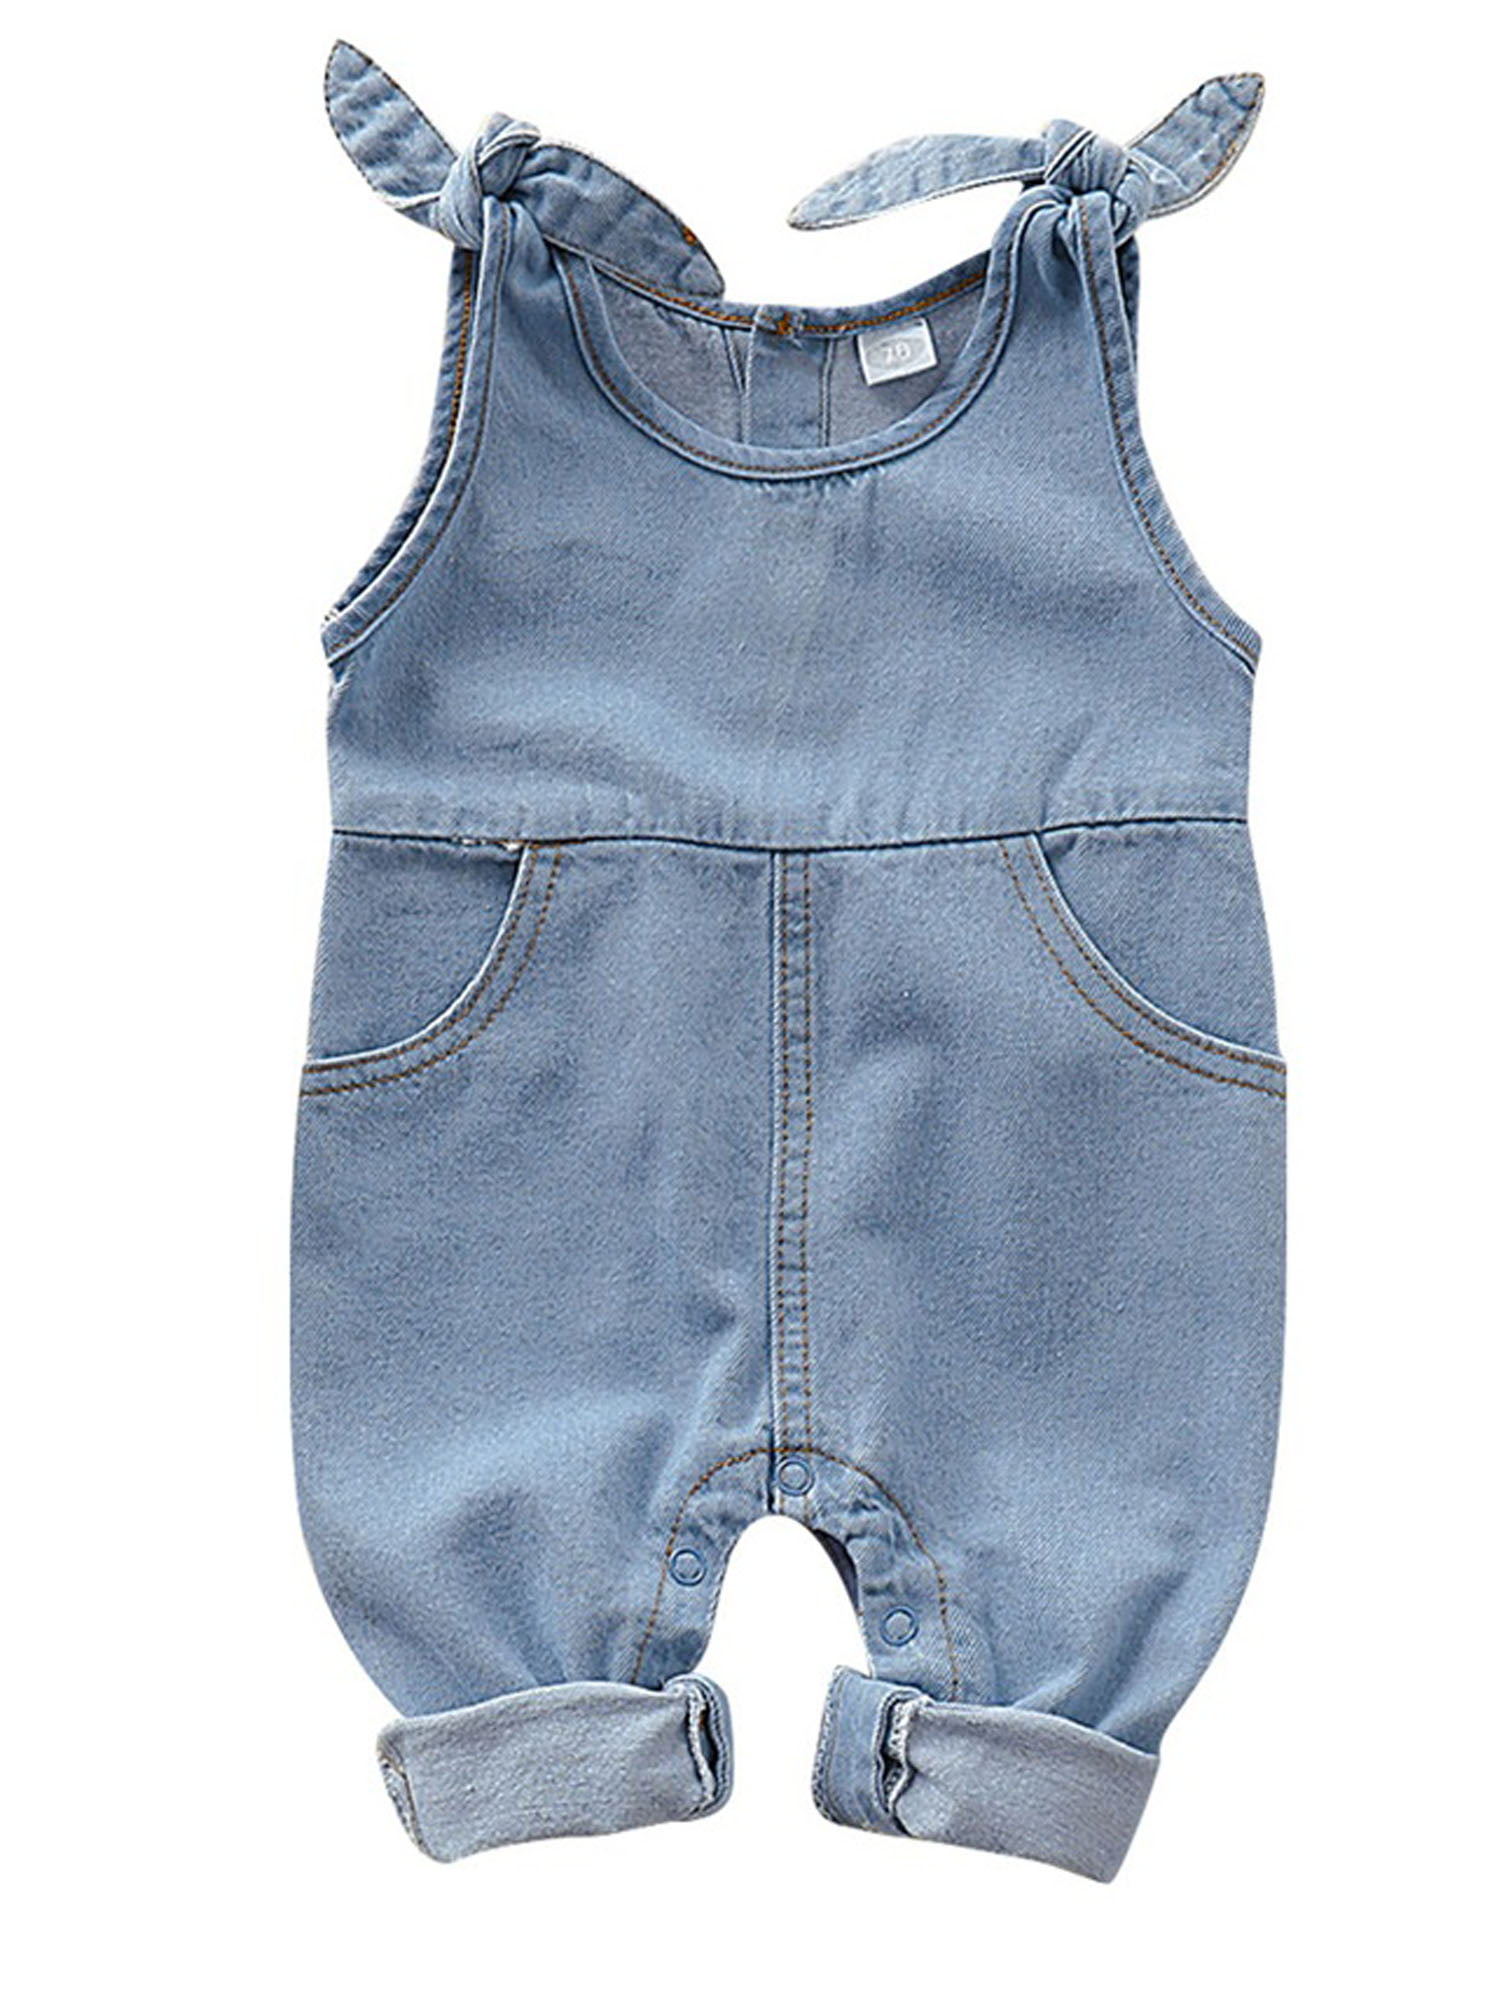 denim jumpsuit for baby boy